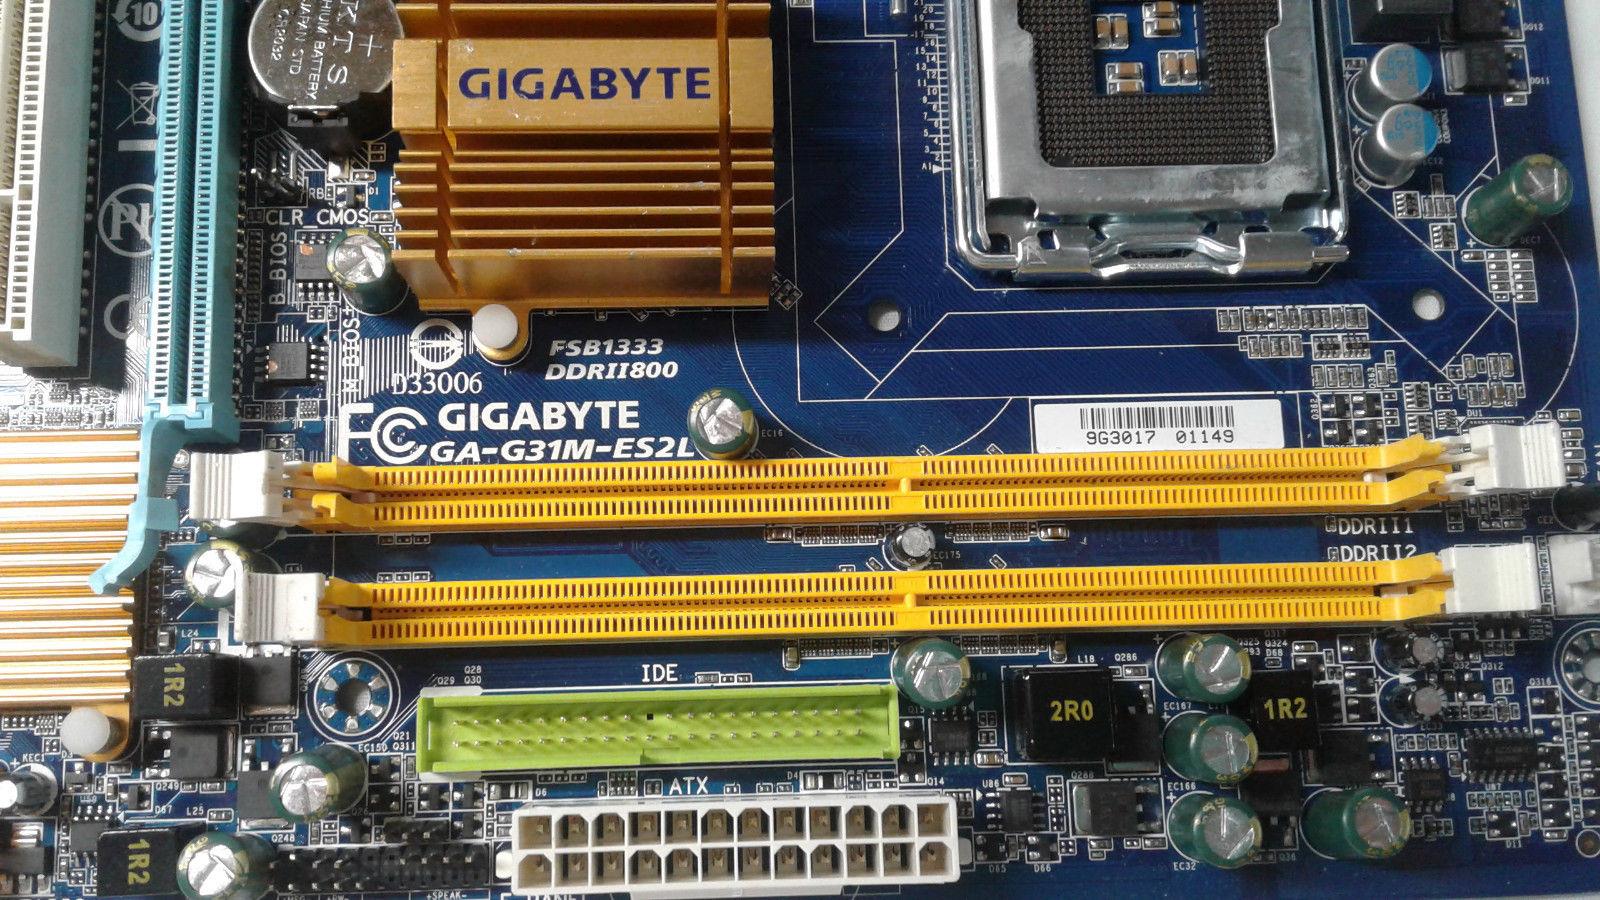  Gigabyte-Motherboard-GA-G31M-ES2L-Rev-2-0-LGA-775-Socket-T-no-CPU  Gi